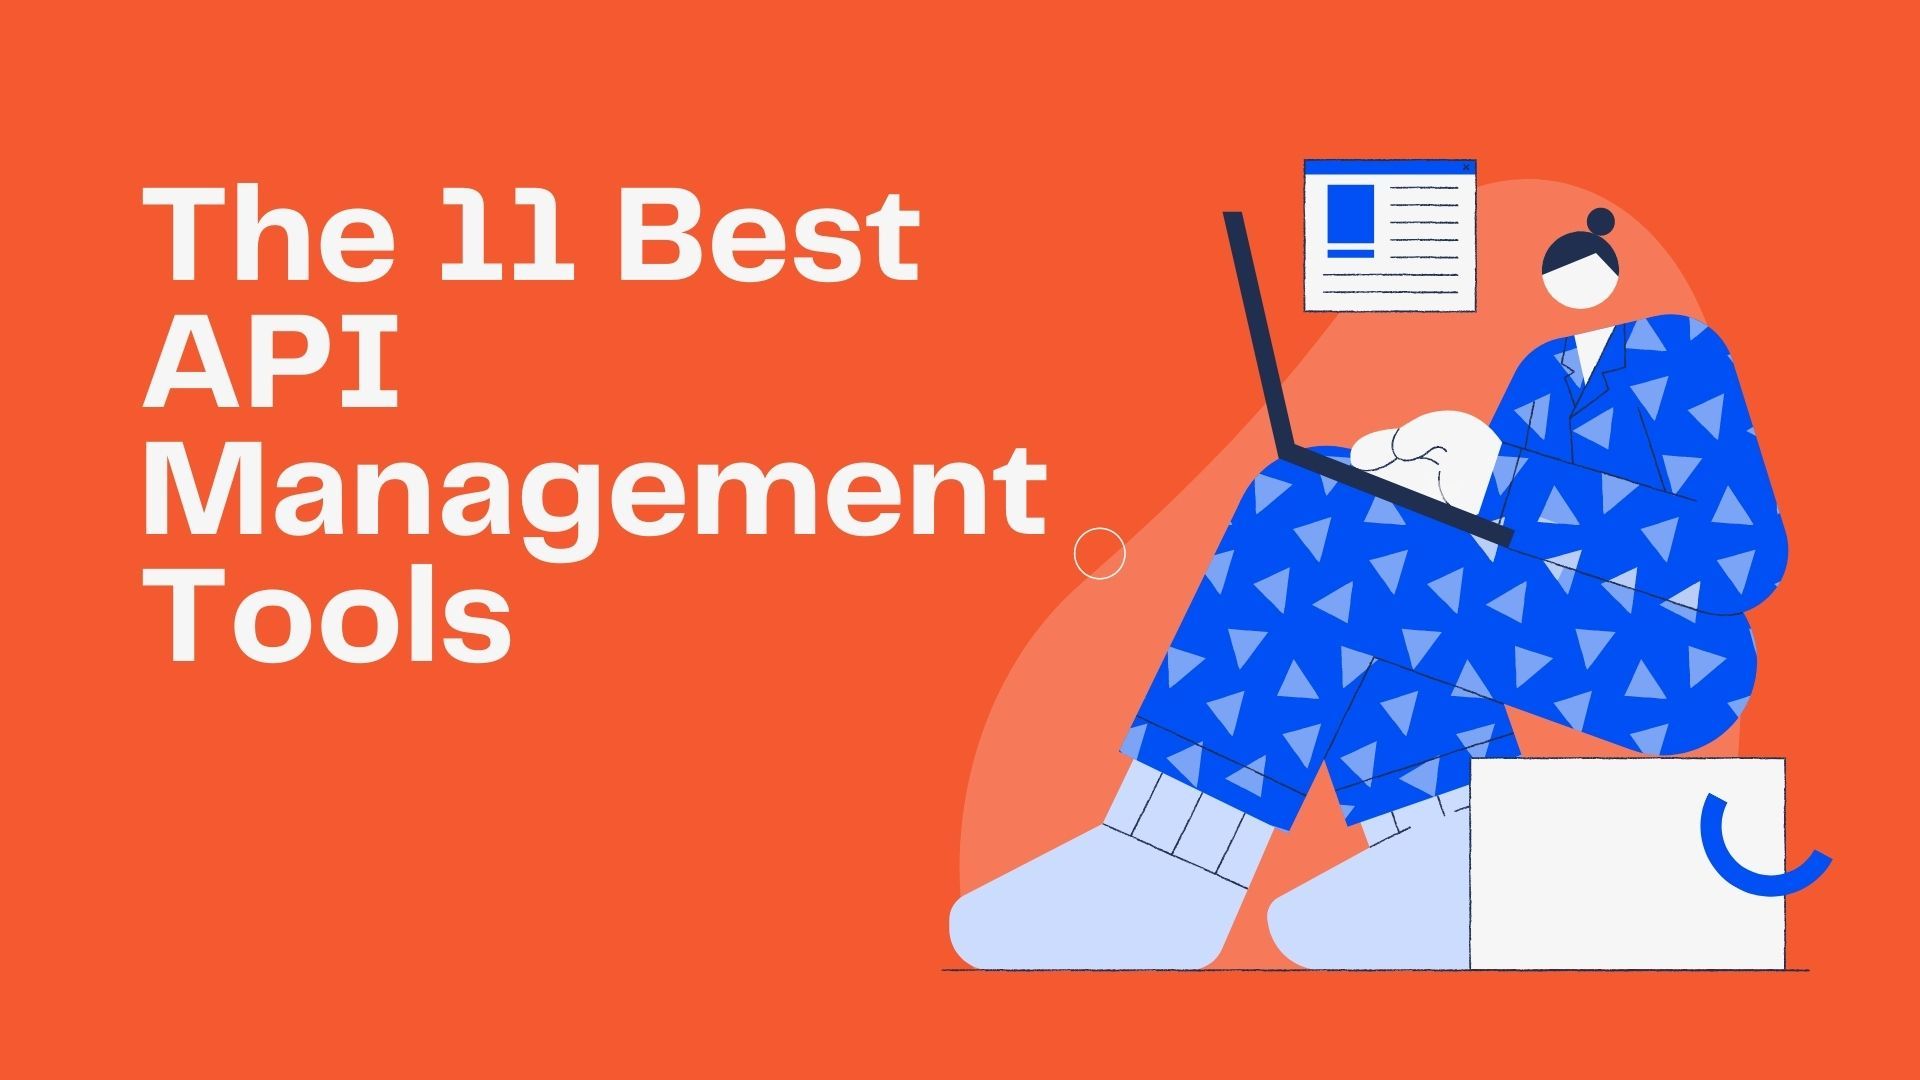 The 11 Best API Management Tools